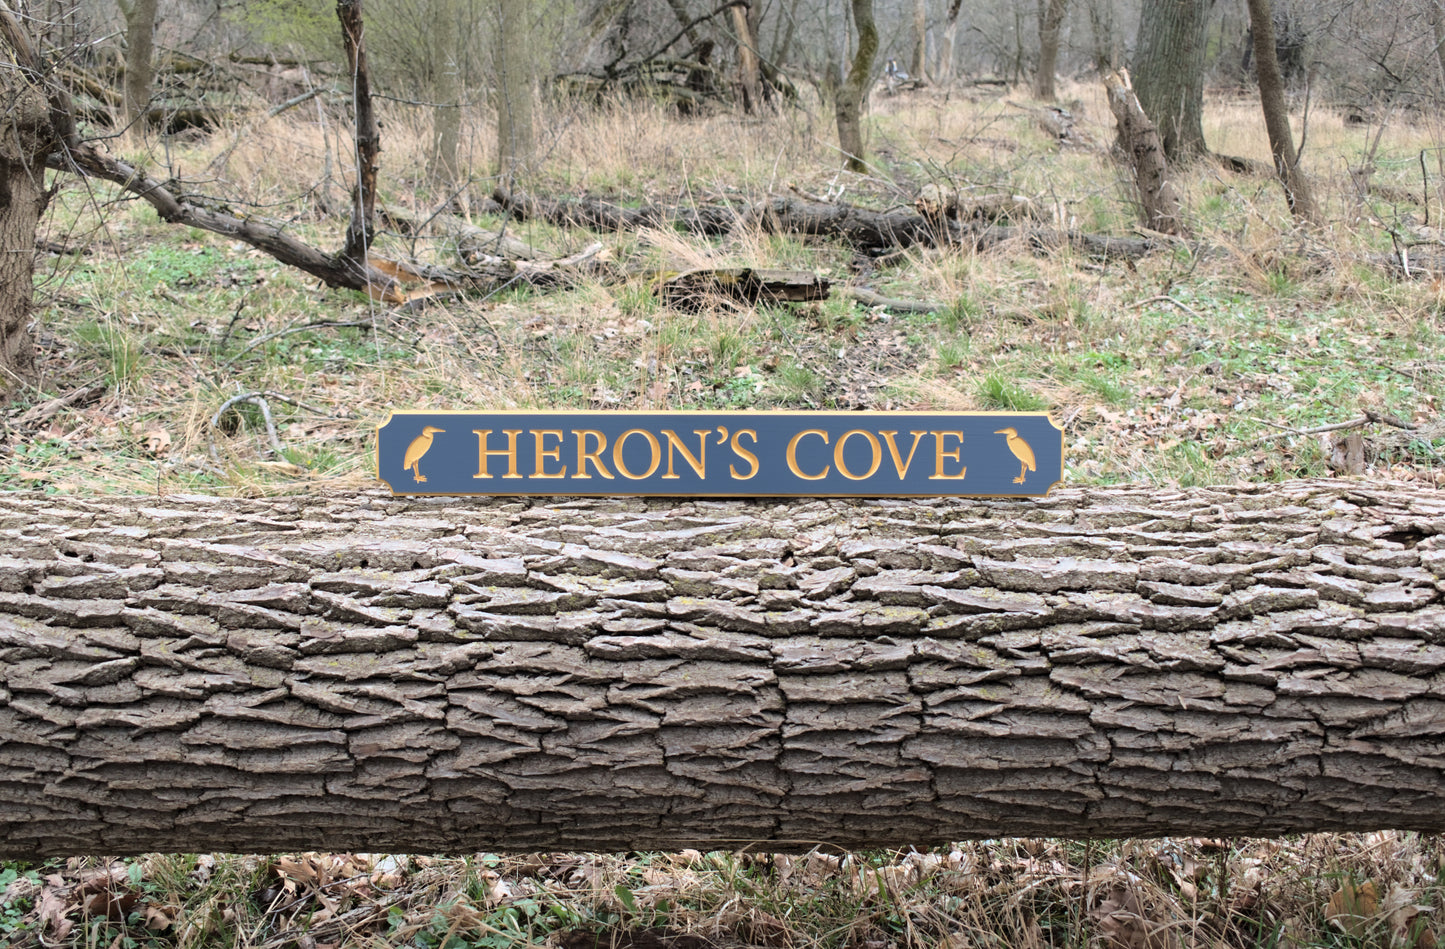 Carved Quarterboard Sign With Heron Design